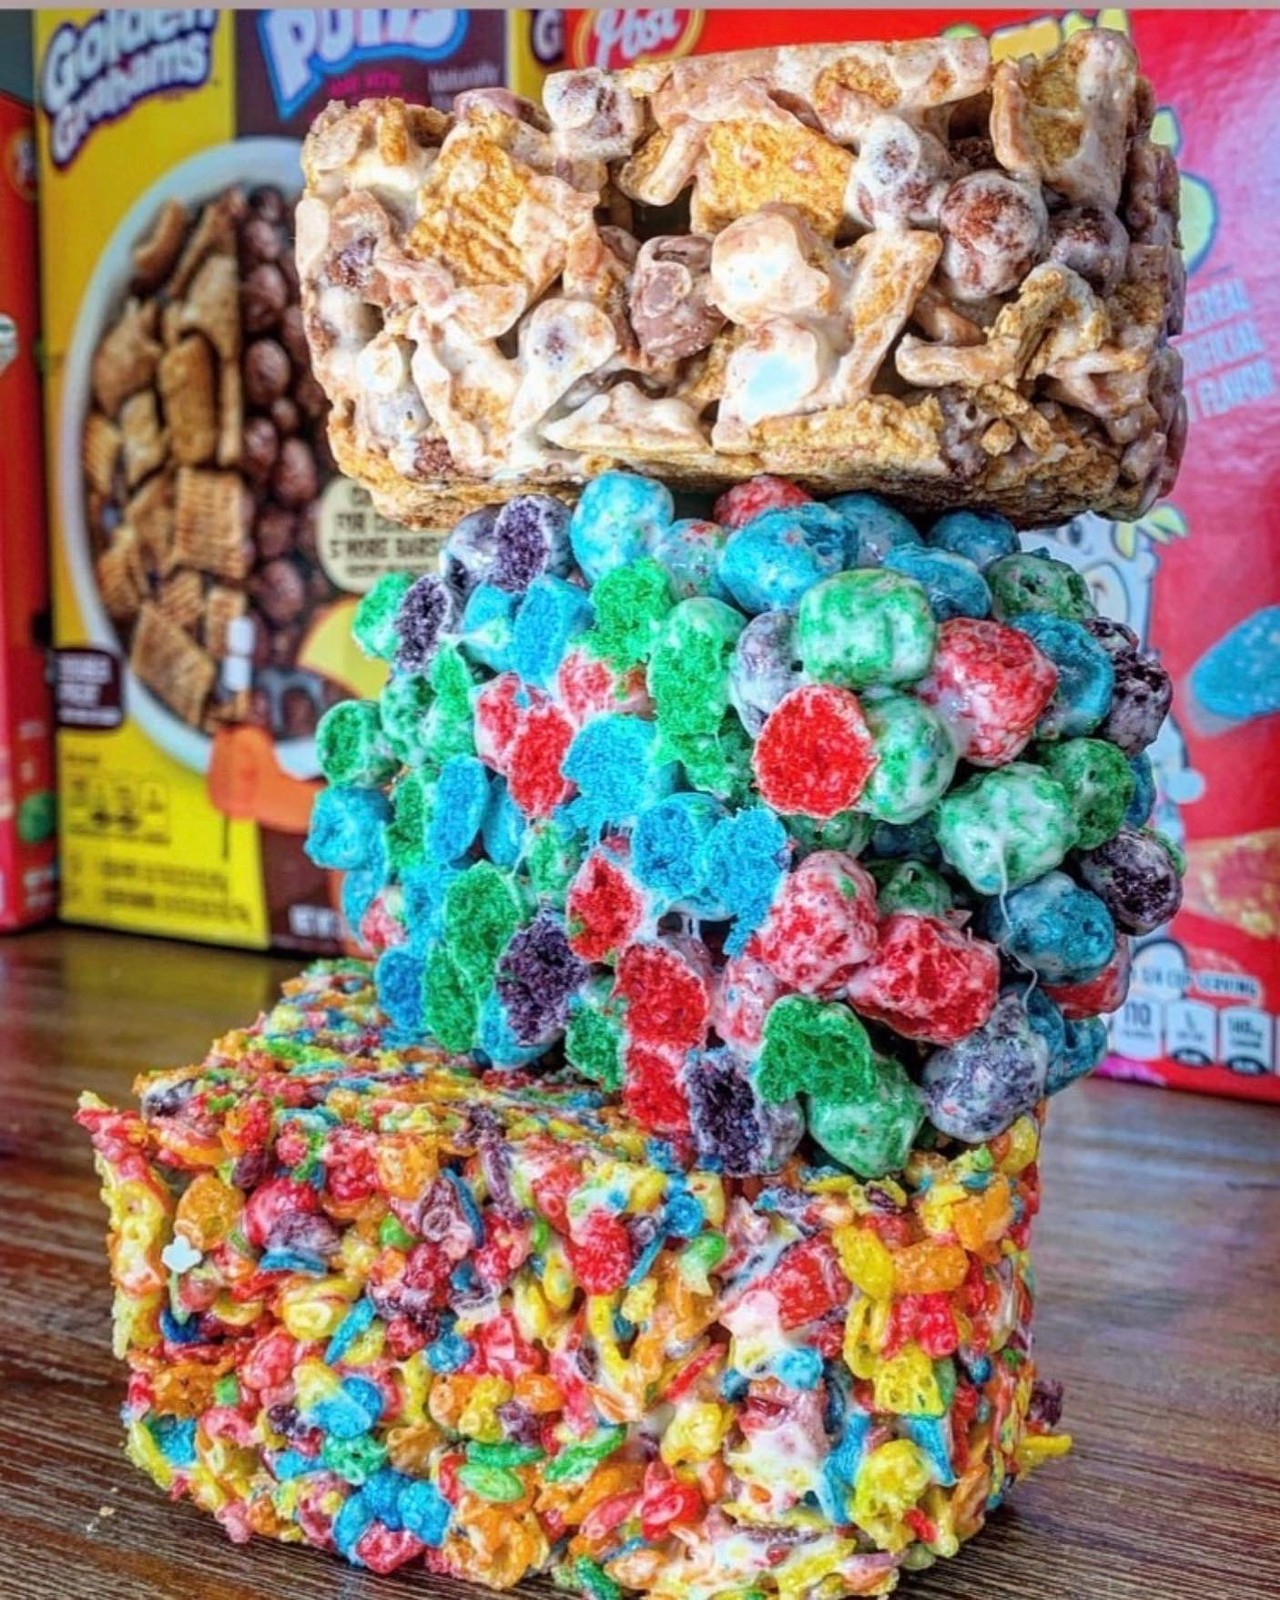 Cereal Killer Sweets
Photo courtesy of @eldereats